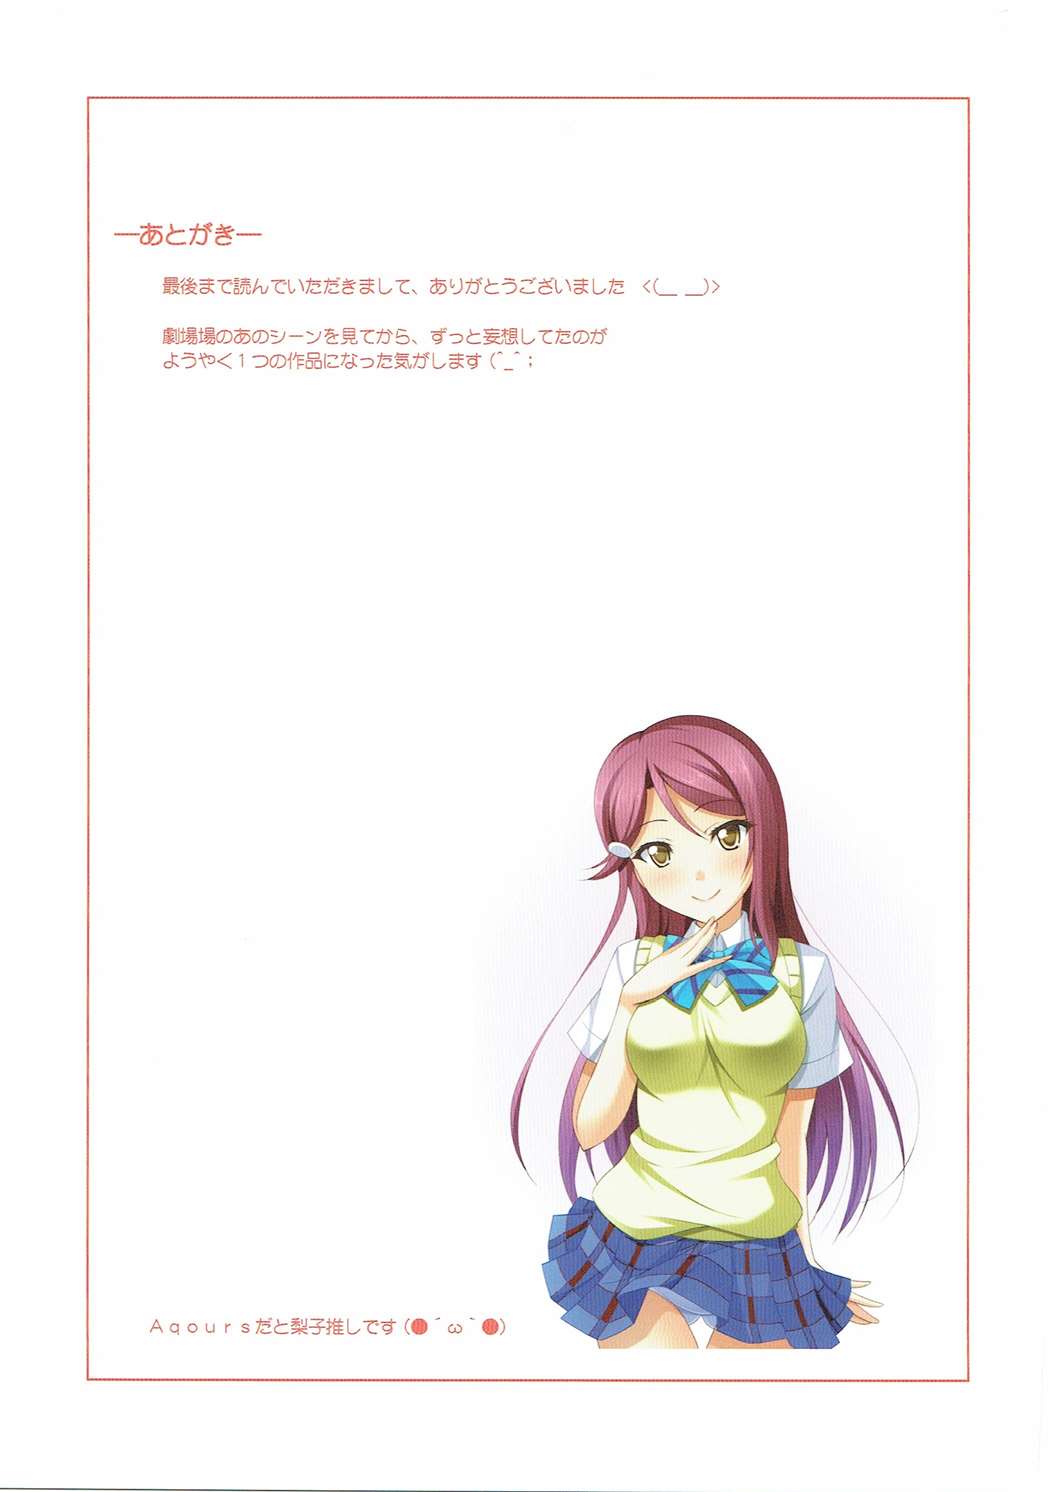 (COMIC1☆10) [K-Drive (Narutaki Shin)] Maki Novels (Love Live!) (COMIC1☆10) [K-Drive (鳴滝しん)] Maki Novels (ラブライブ!)